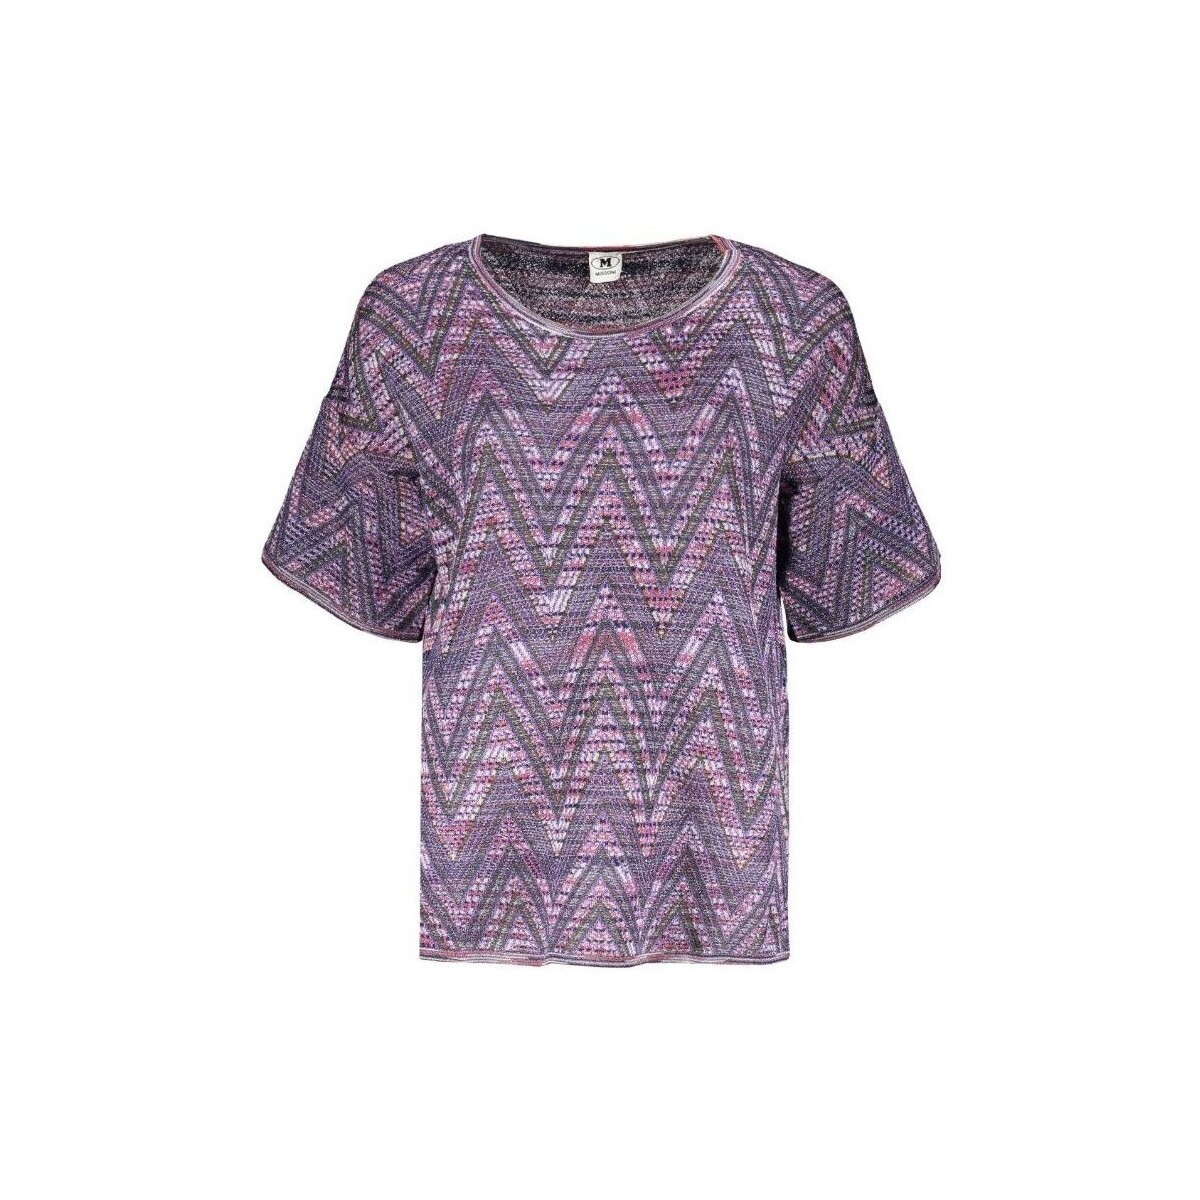 textil Mujer Camisetas manga corta Missoni - ds22sl0ubk029c Violeta